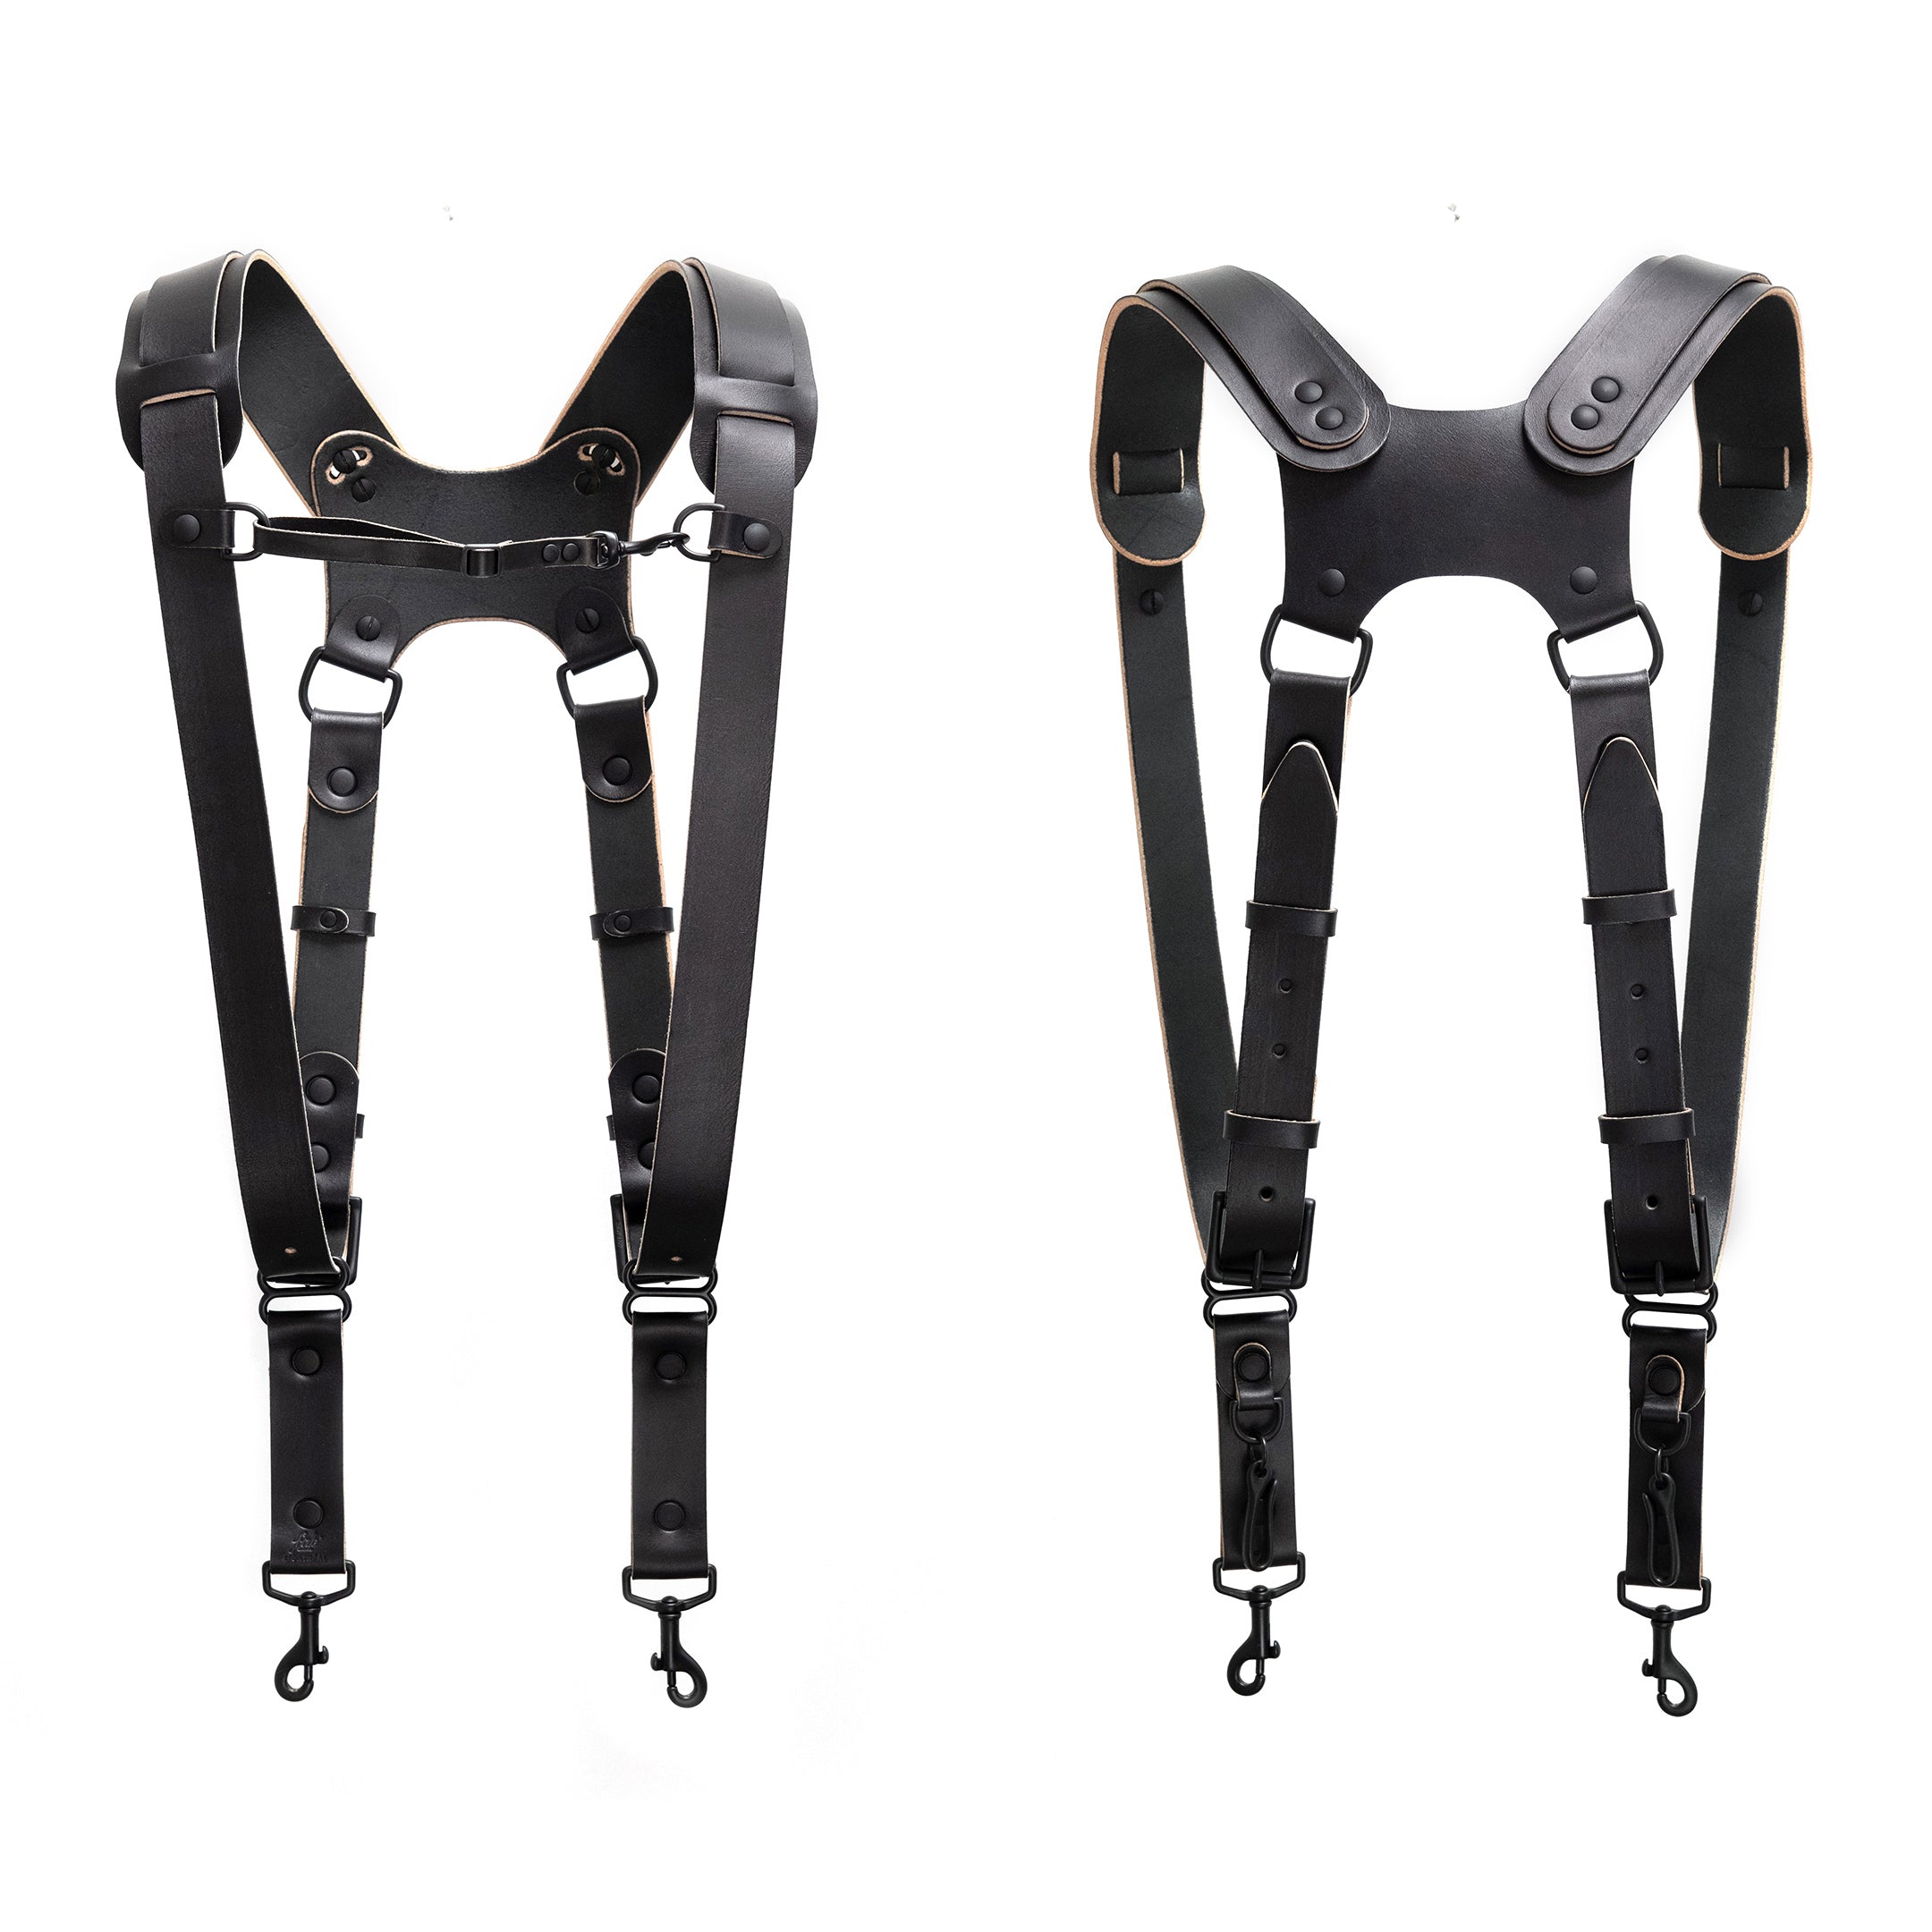 Fab' F22 harness - Black leather - Size XL